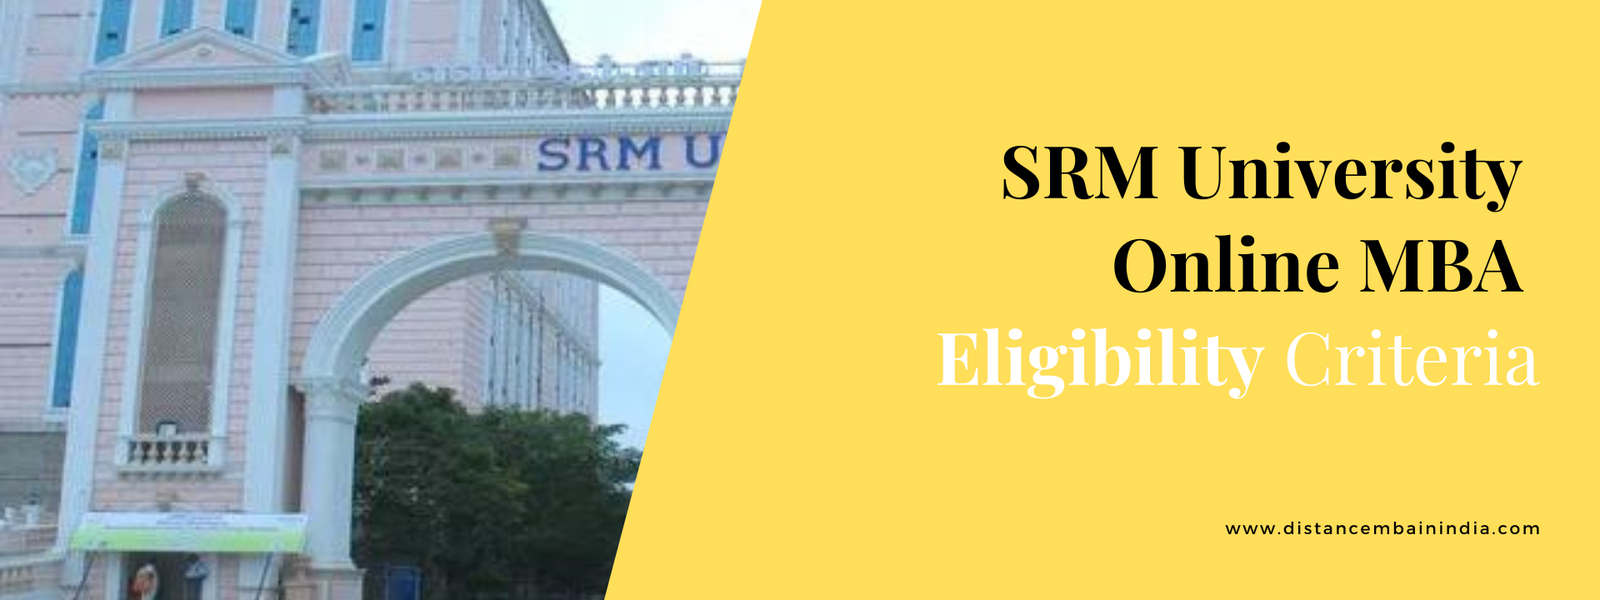 SRM University Online MBA Eligibility Criteria